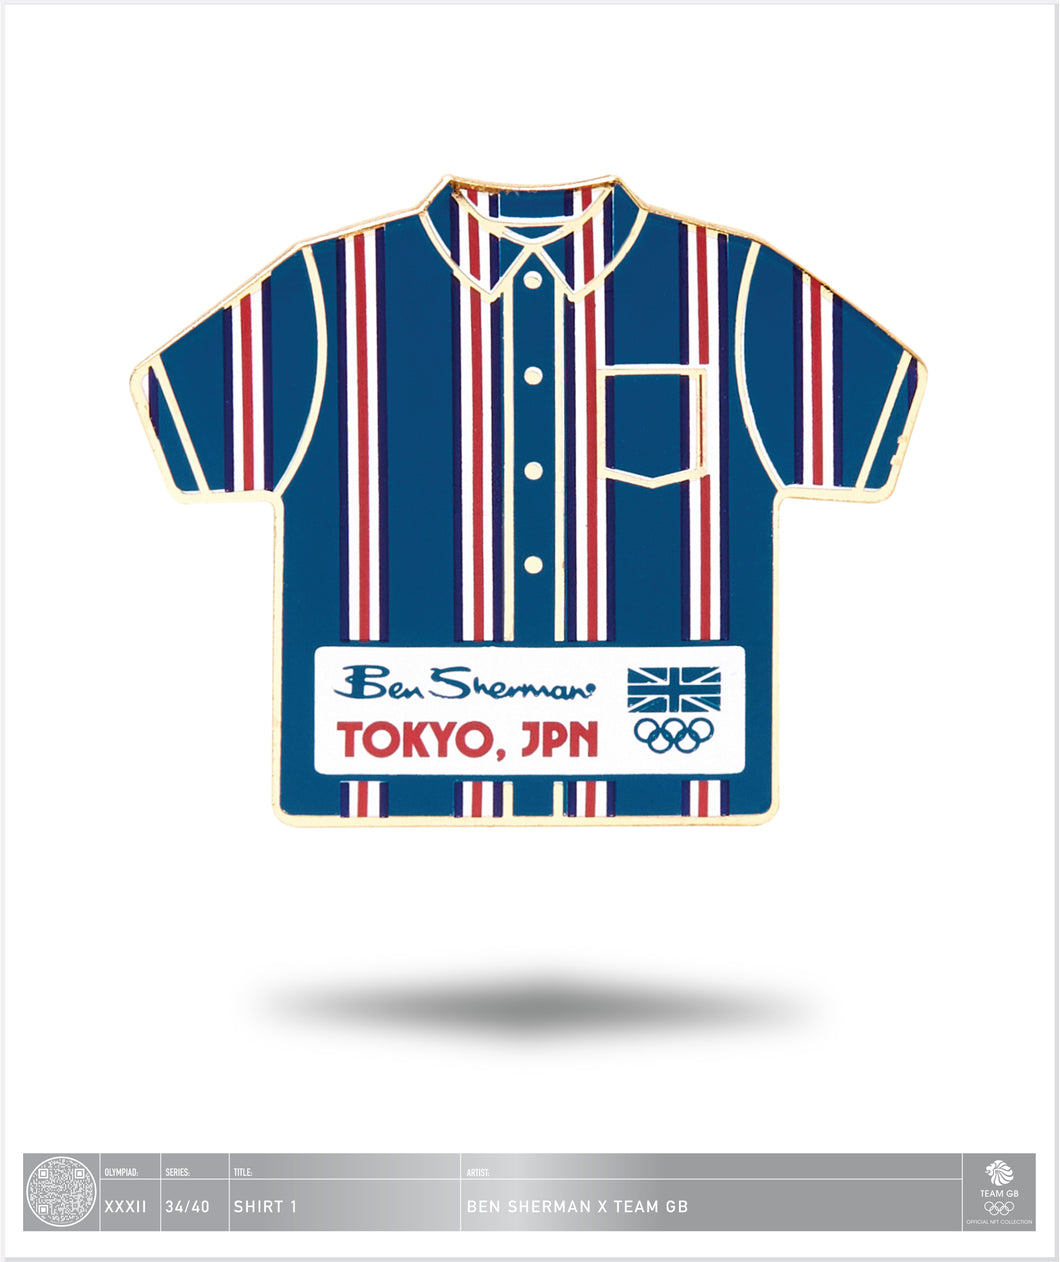 Ben Sherman Tokyo - Shirt 1 - 34 / 40